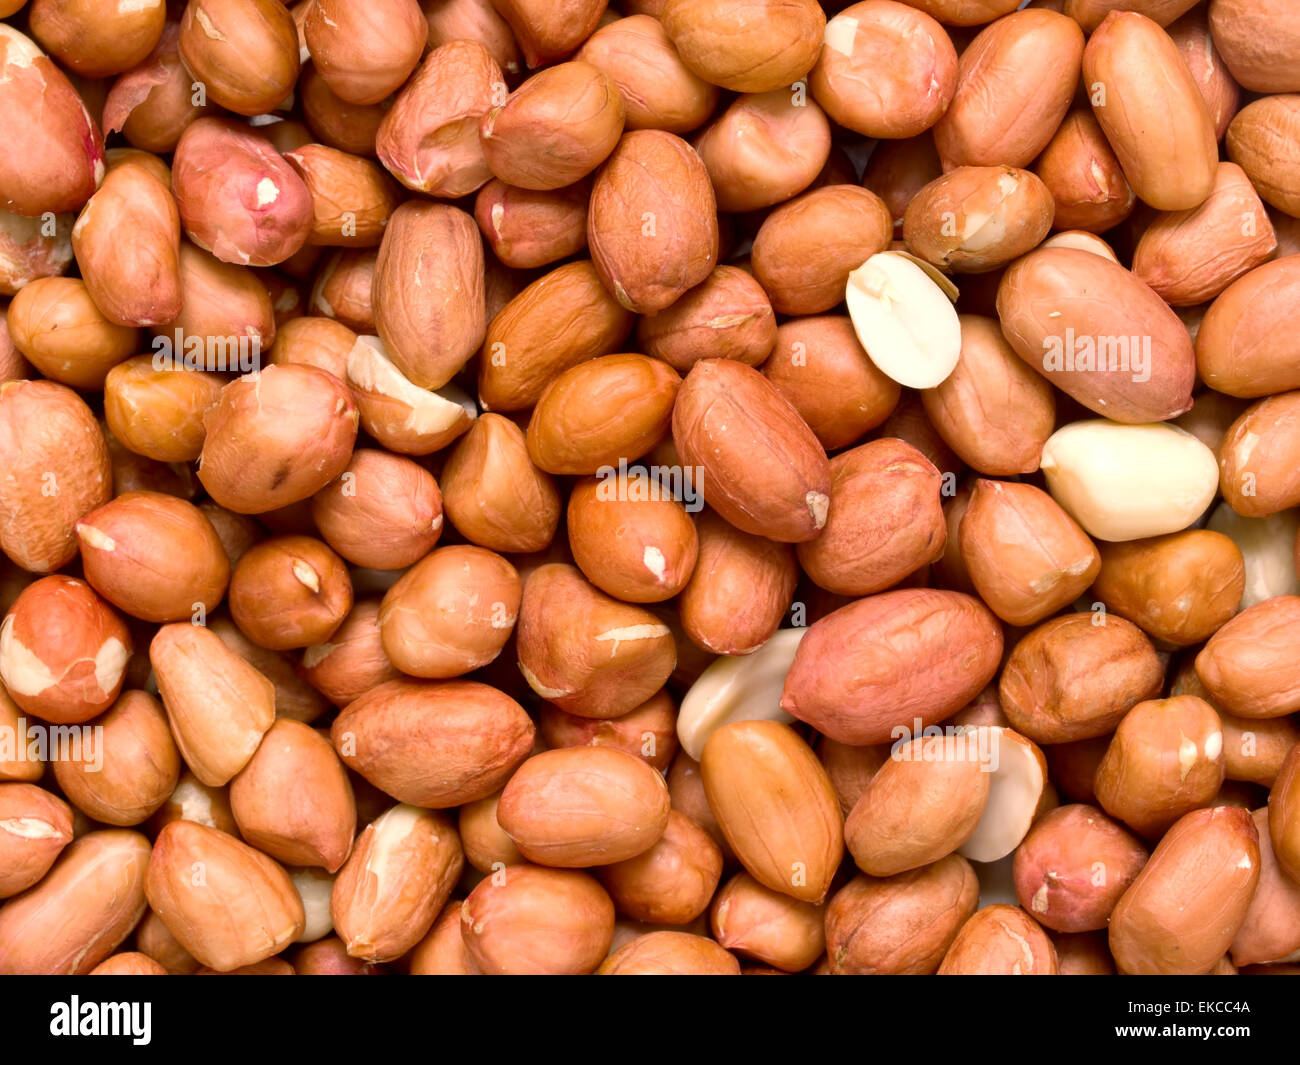 raw uncooked peanuts Stock Photo